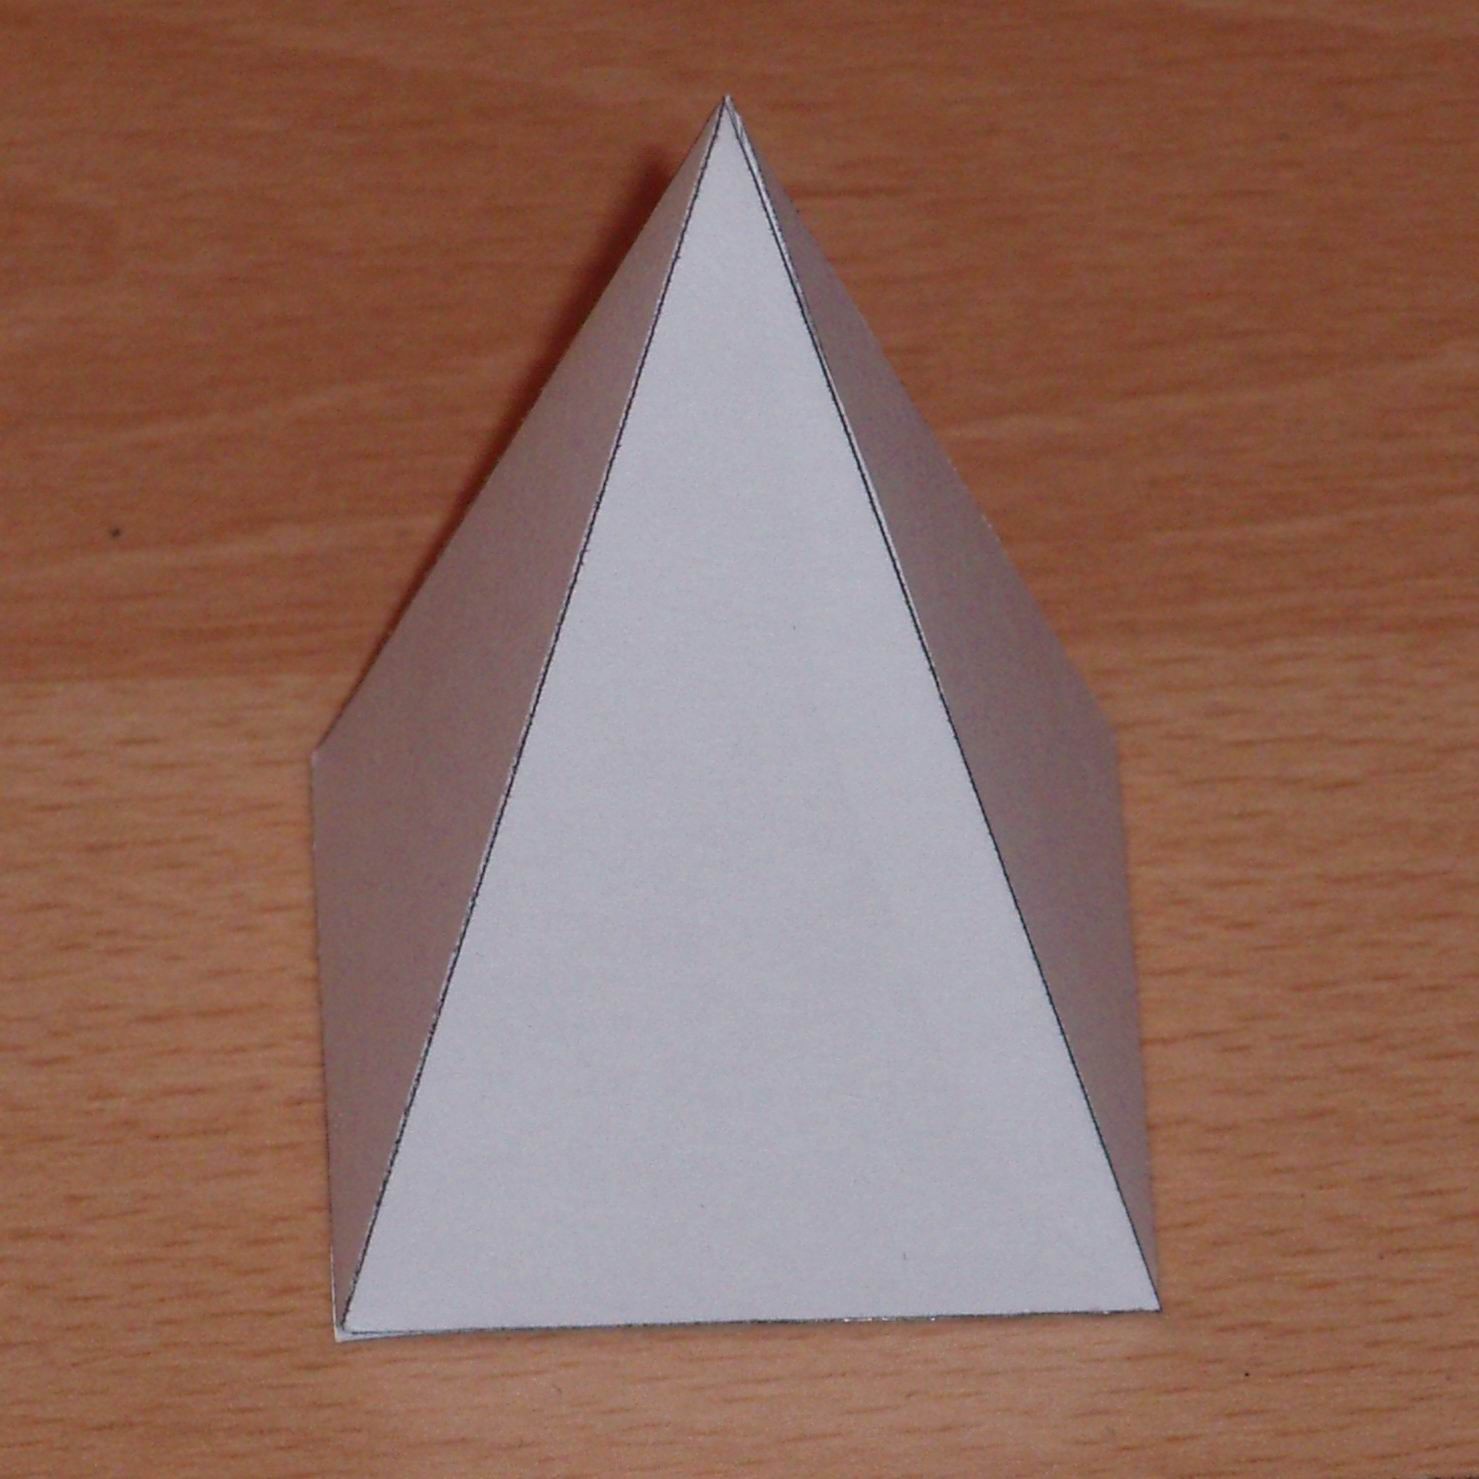 Pyramid Papercraft Paper Model Square Pyramid orogami